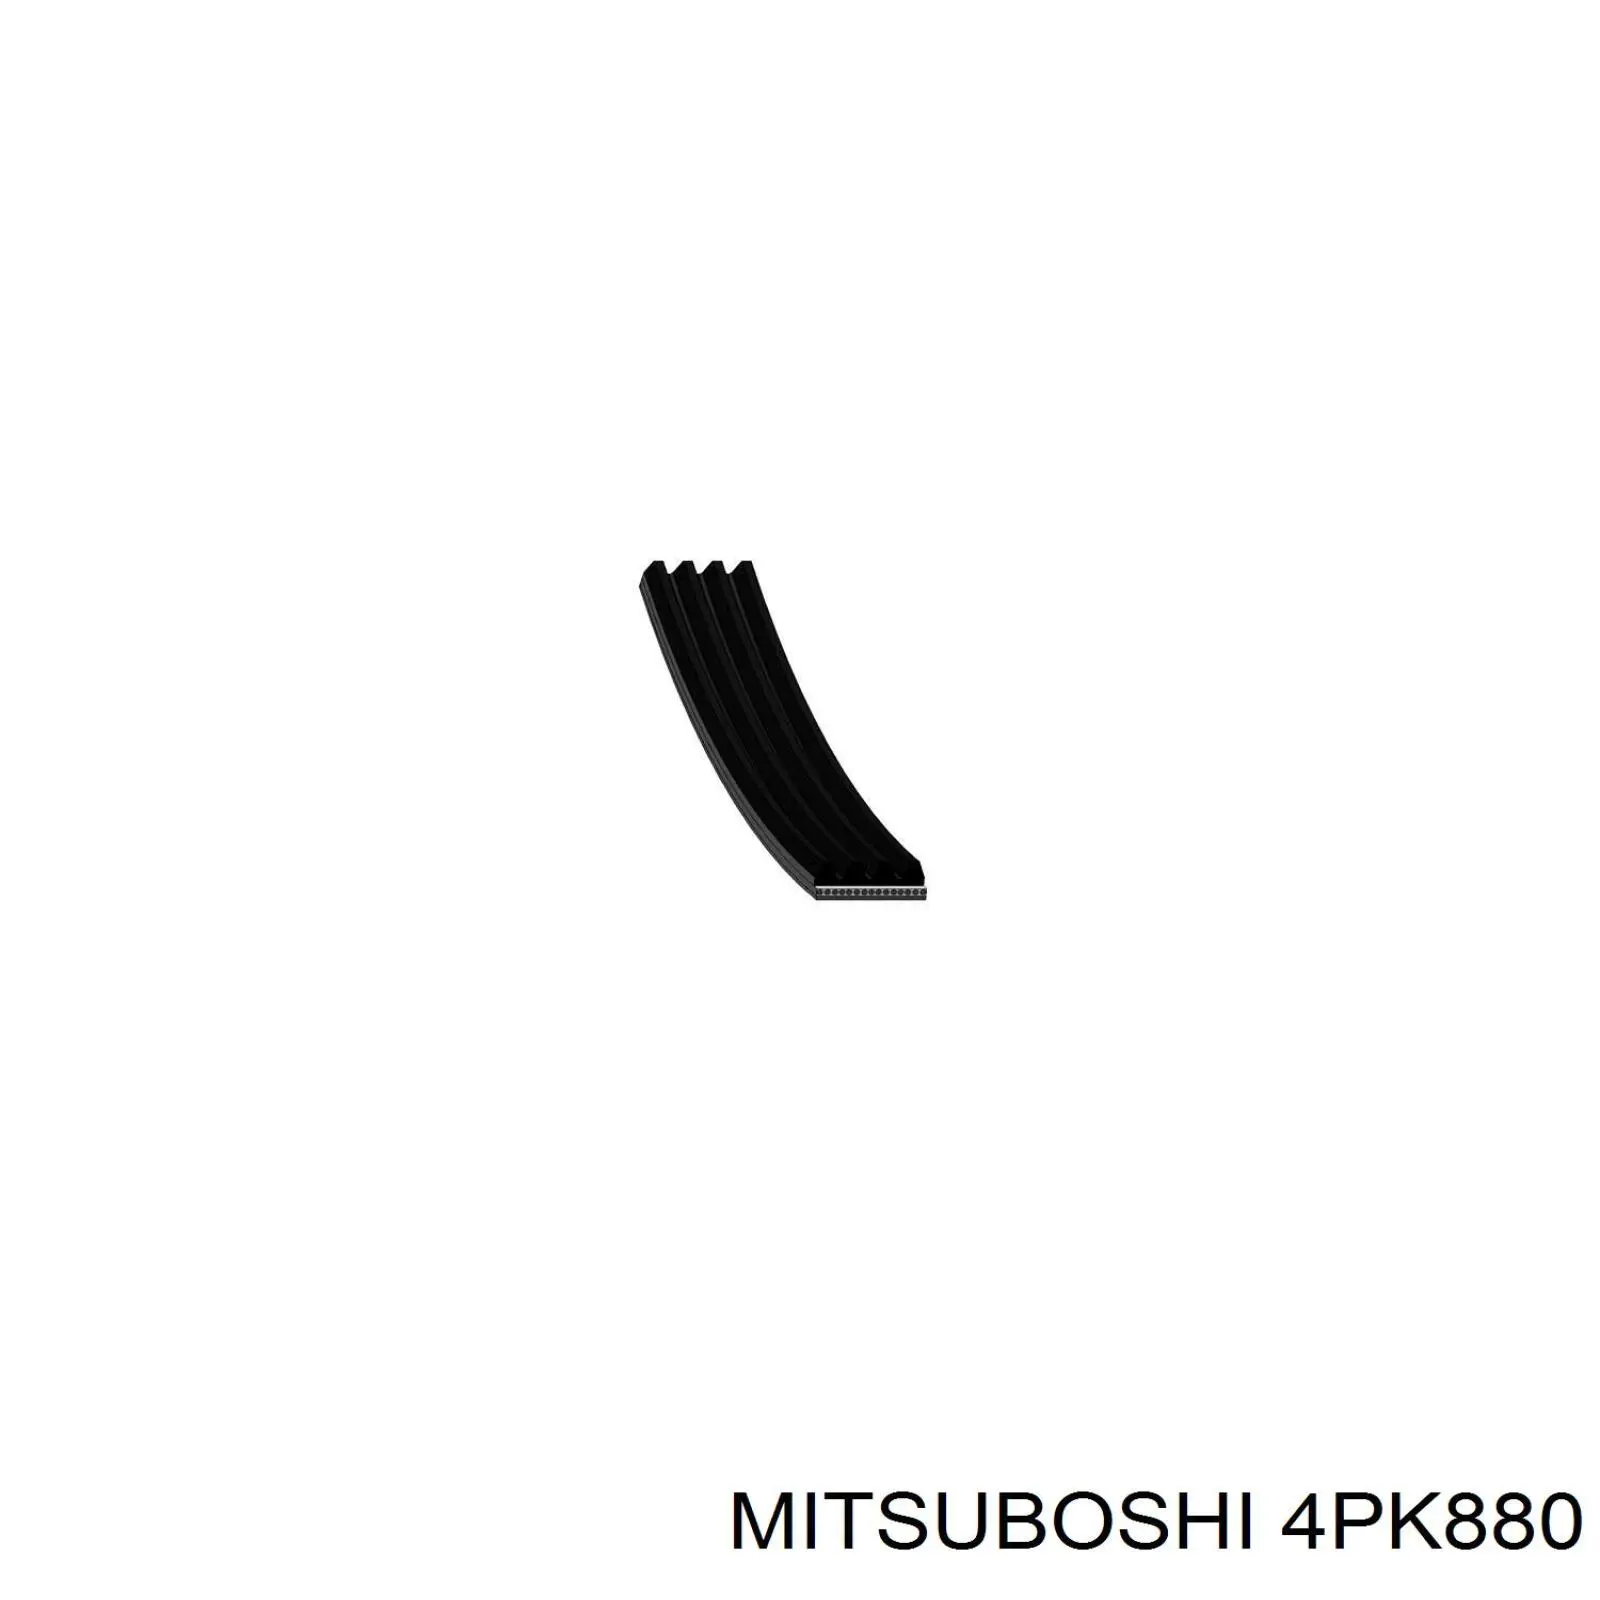 4PK880 Mitsuboshi correa trapezoidal